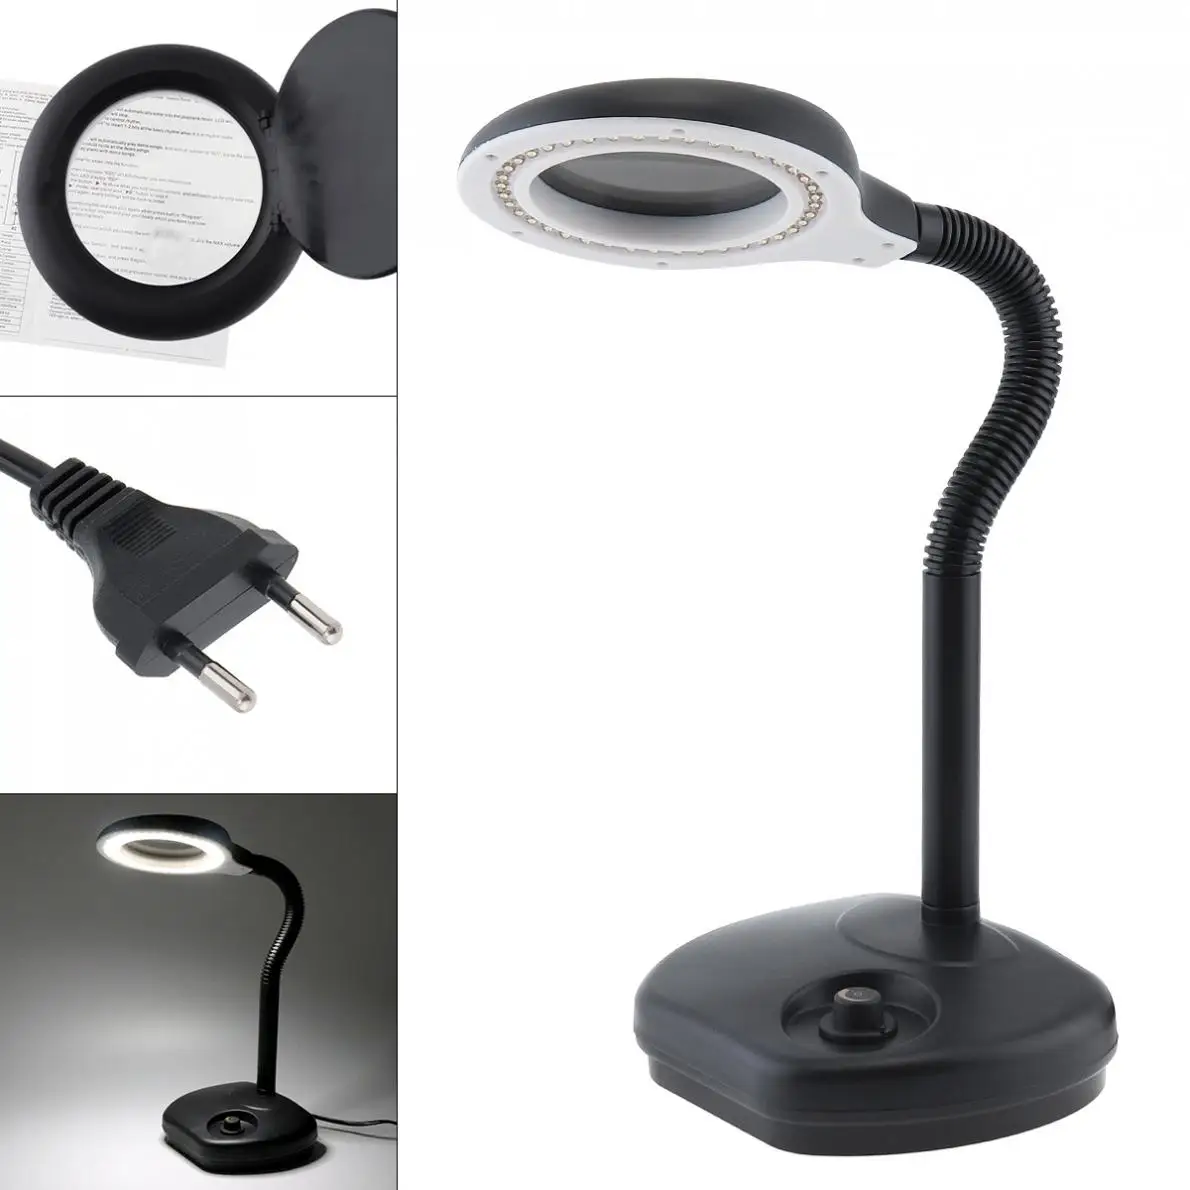 

Wlks-308 110V / 220V 18W Magnifying Light Brightness Desk Lamp with 5X 10X and 40 LED Lighting Support Dimmer for Reading